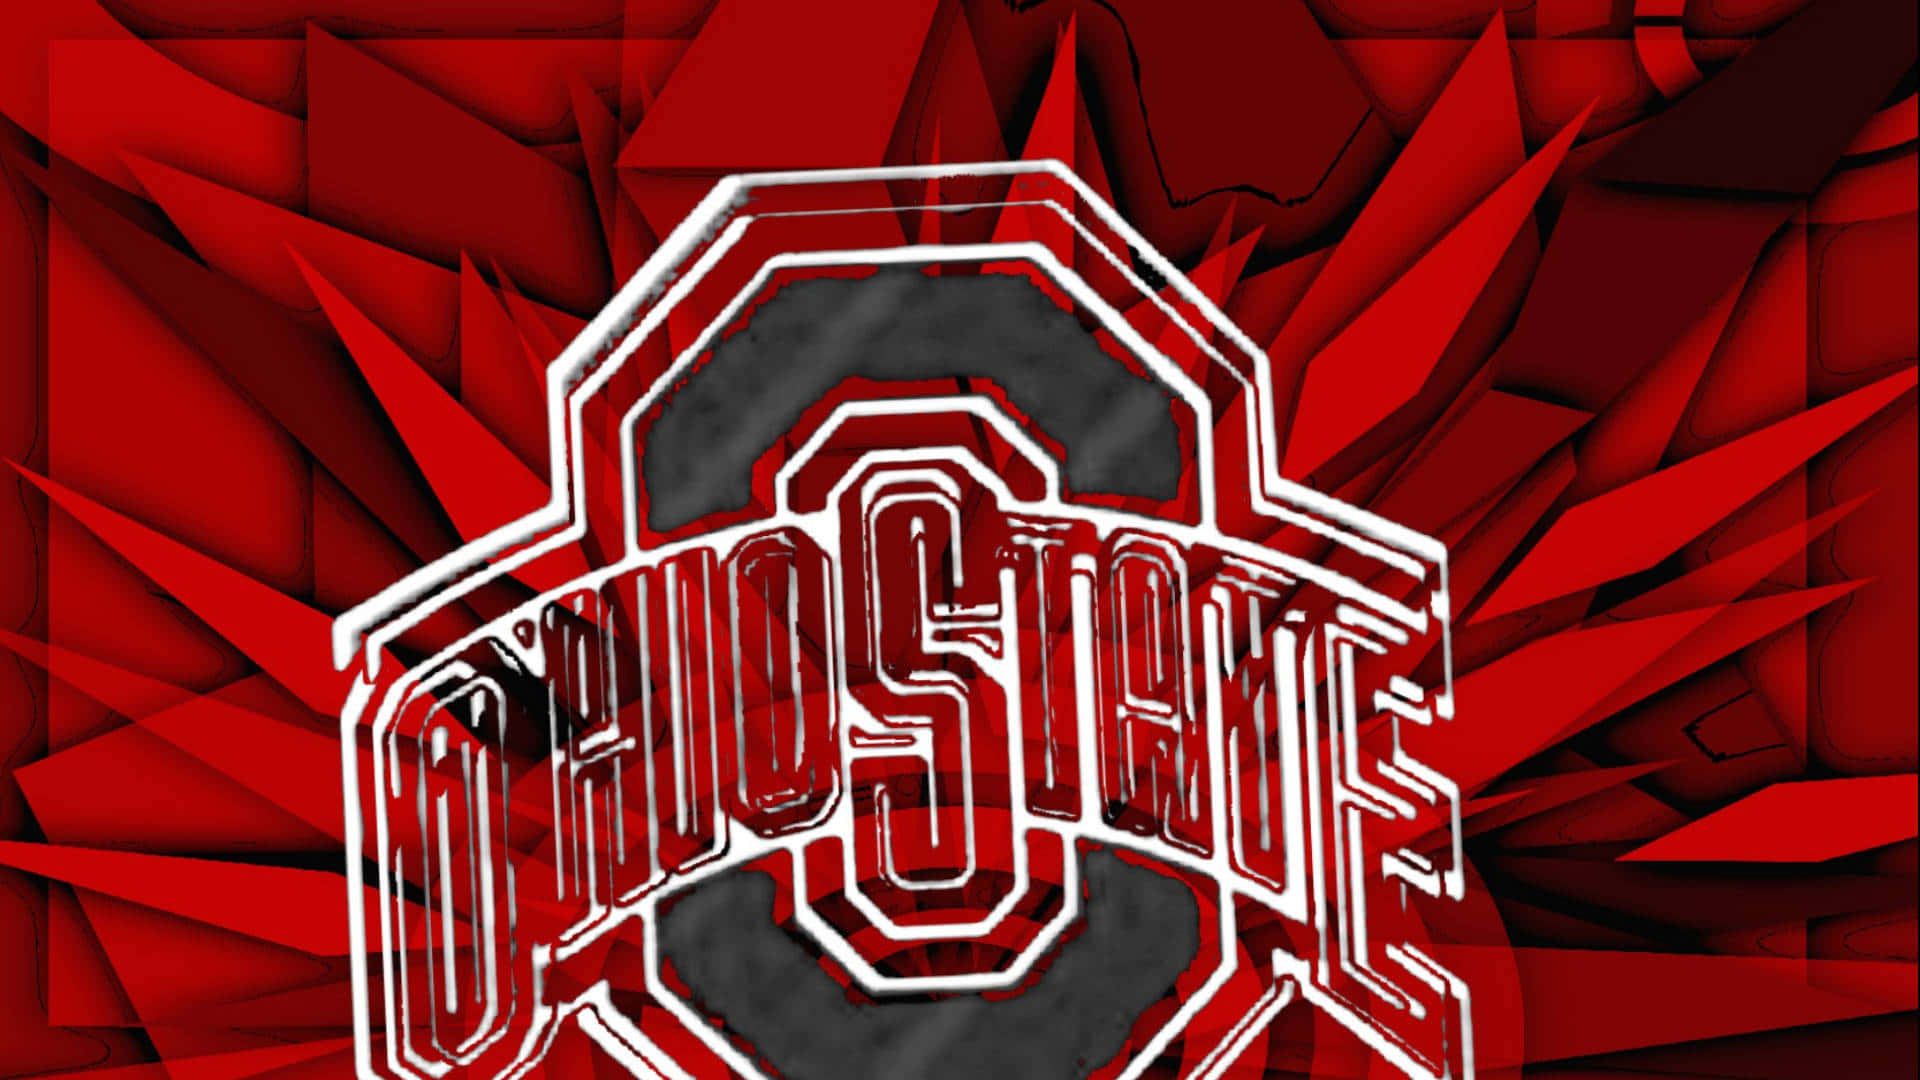 Ohiostate-logotypen På En Röd Bakgrund. Wallpaper